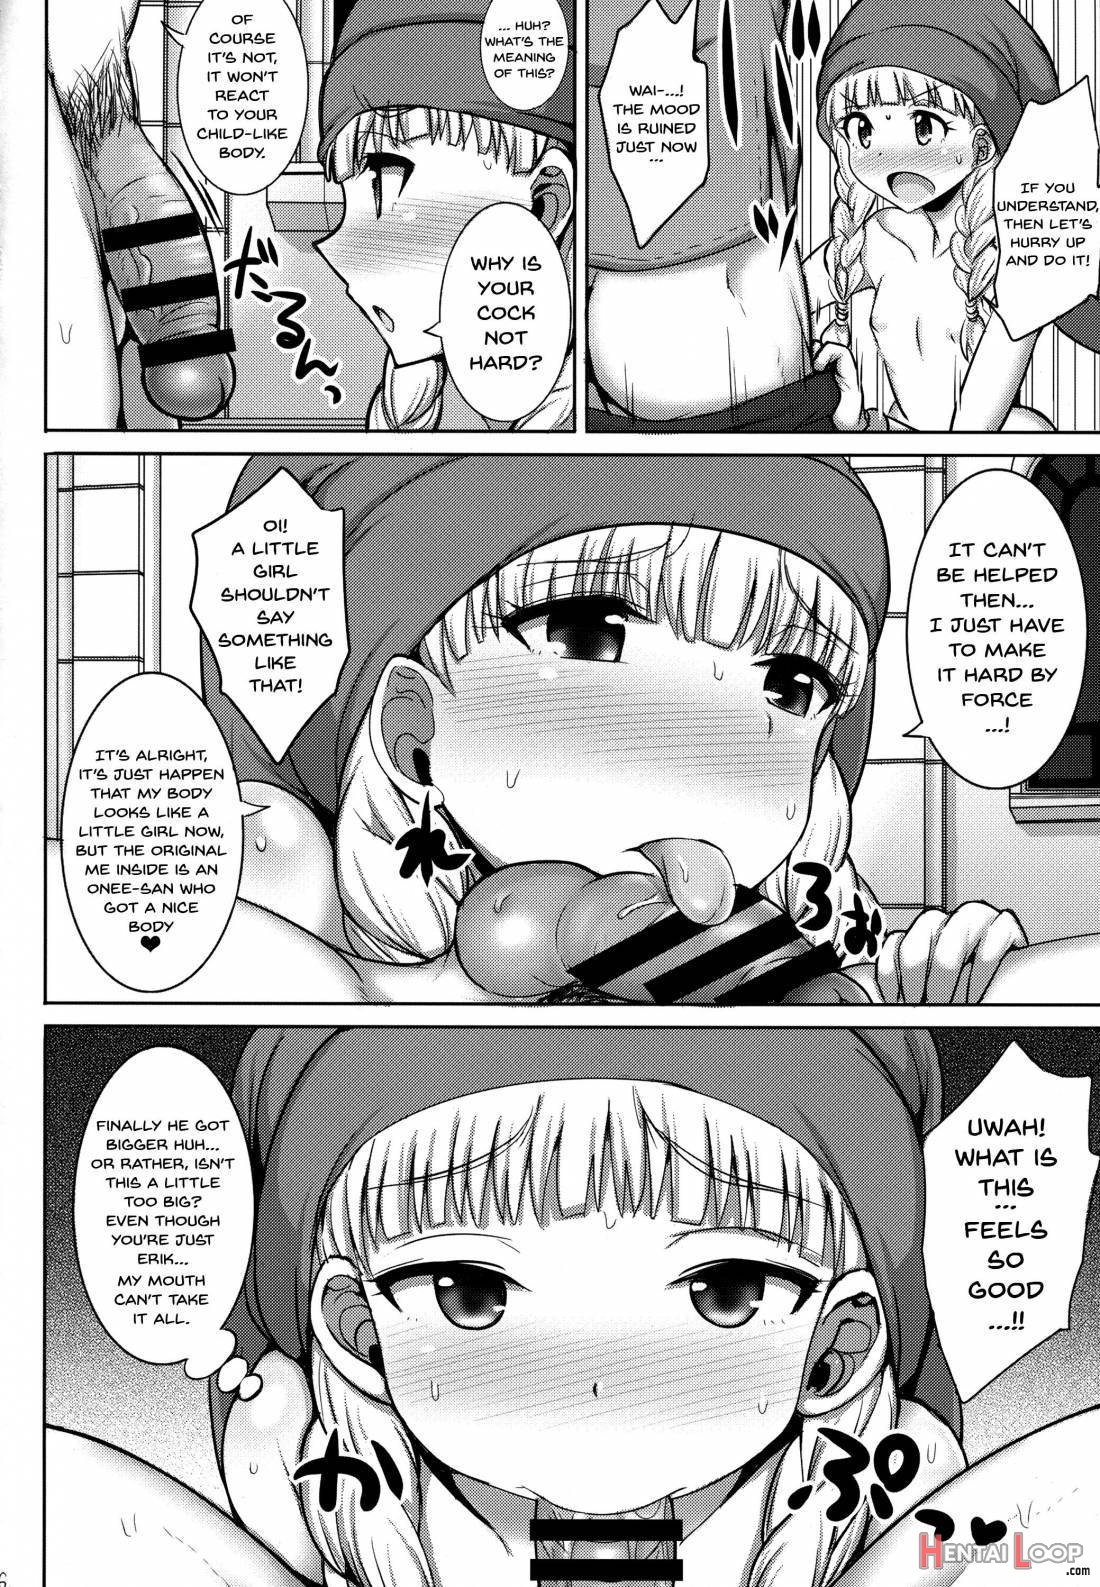 Veronica-sama Returns page 5